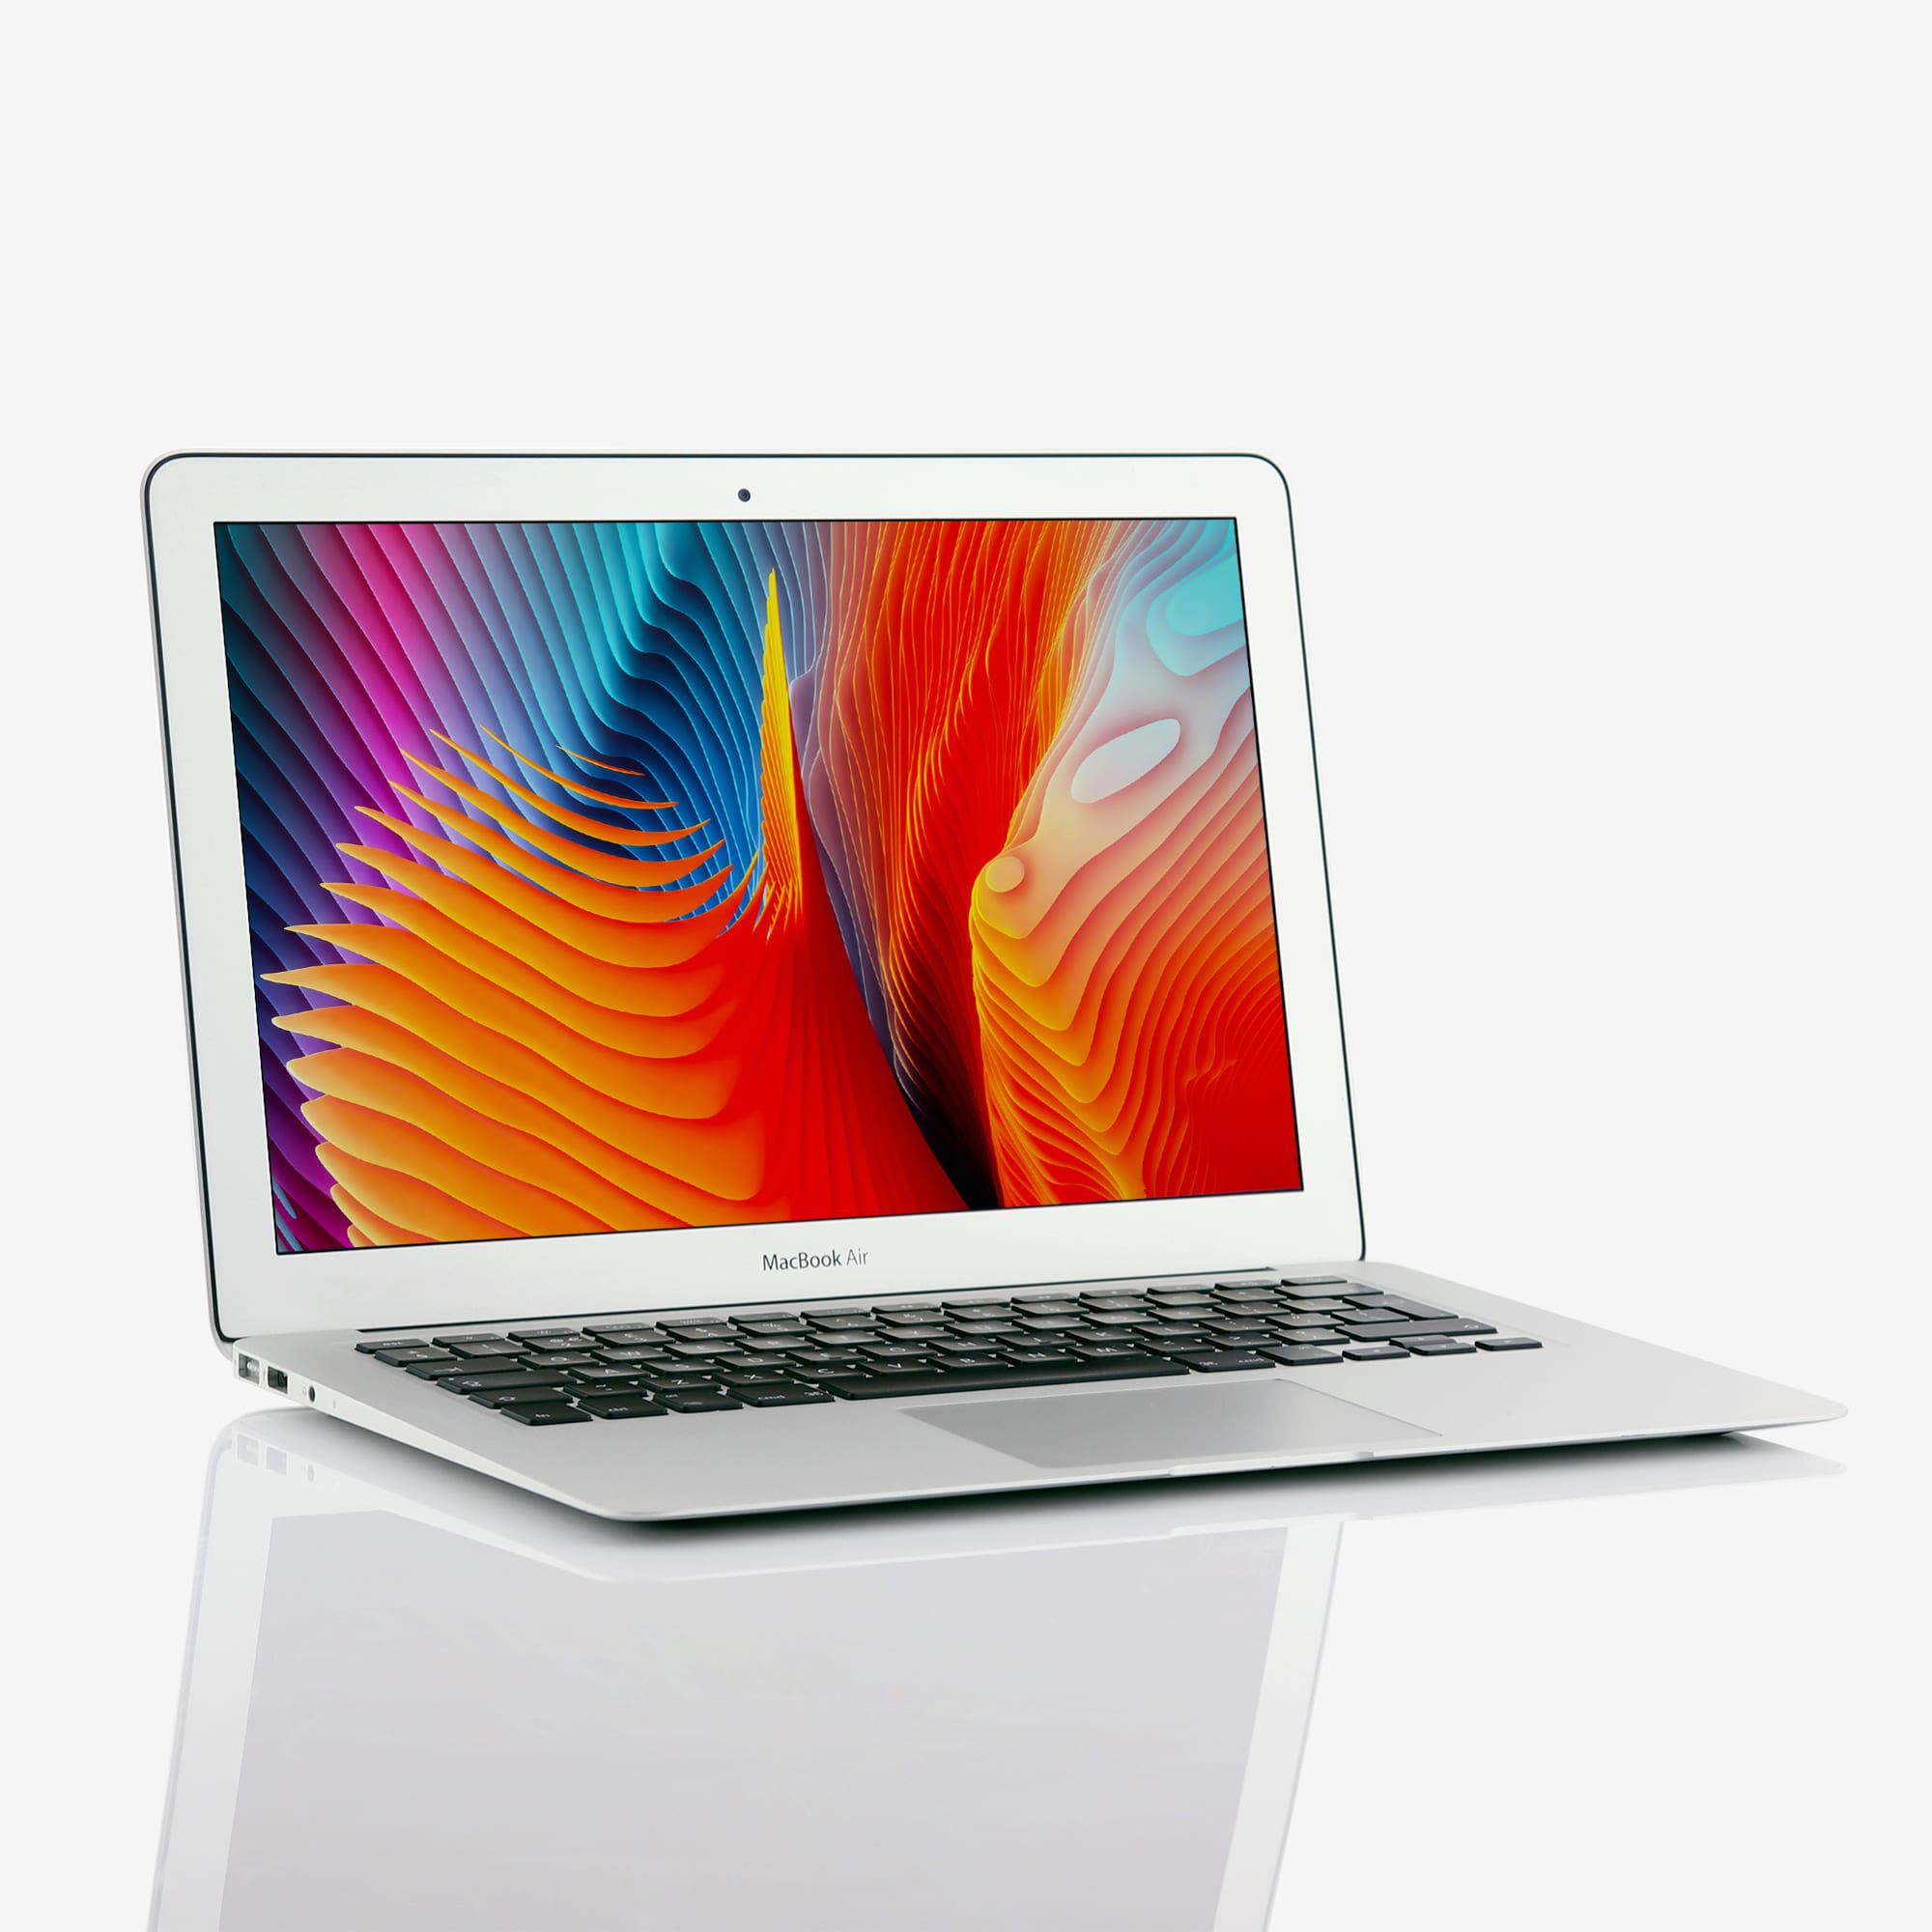 1 x Apple MacBook Air 13 Inch Intel Core i5 1.30 GHz (2013)